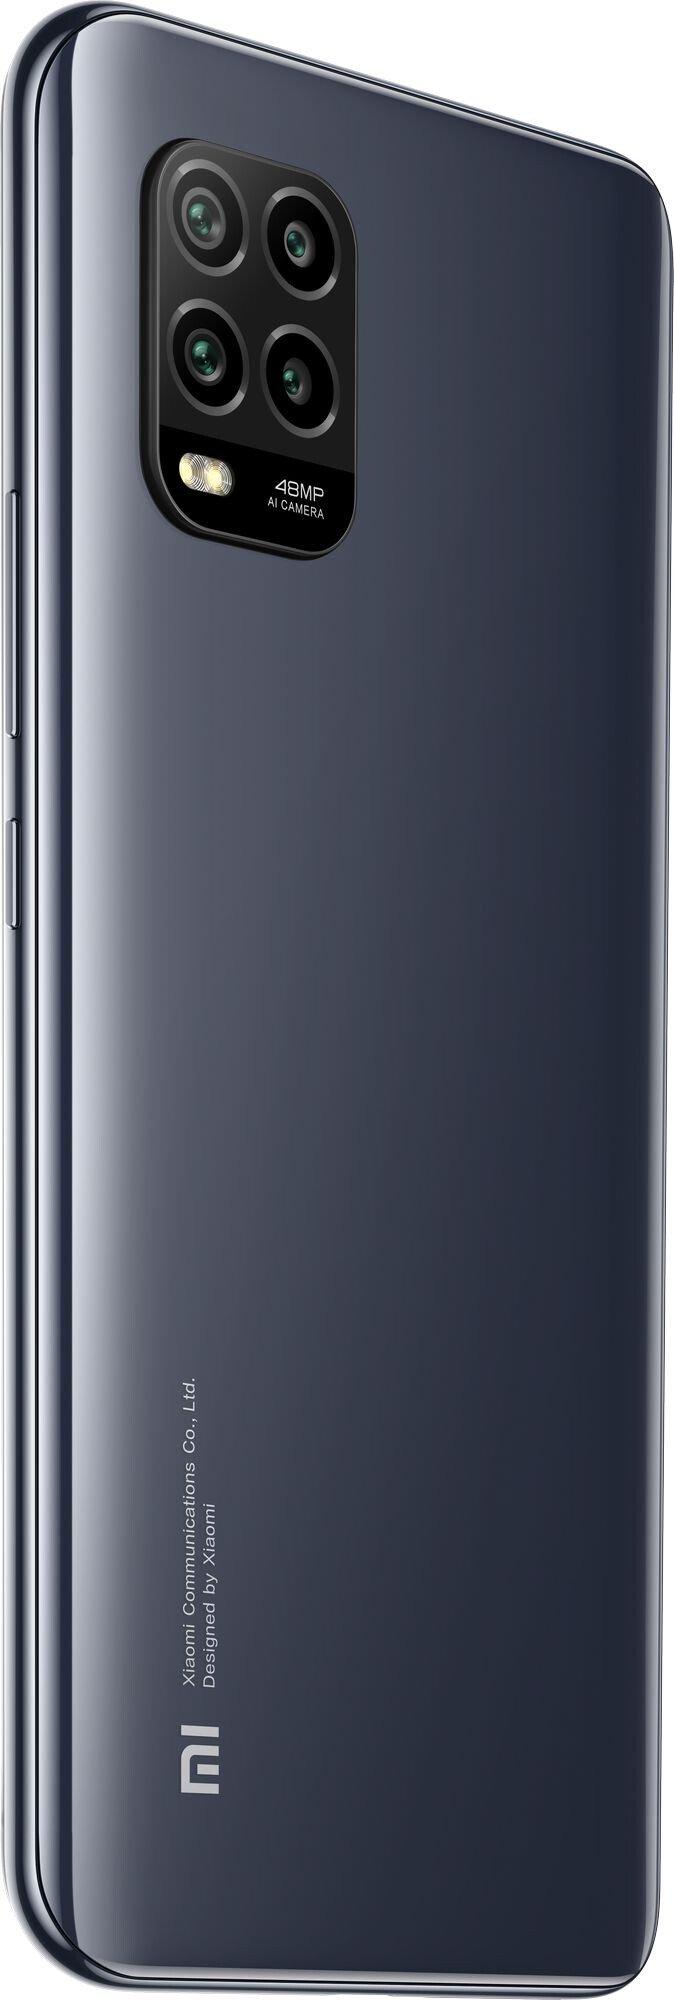 Смартфон Xiaomi Mi 10 Lite 5G 6/64Gb Cosmic Grey заказать